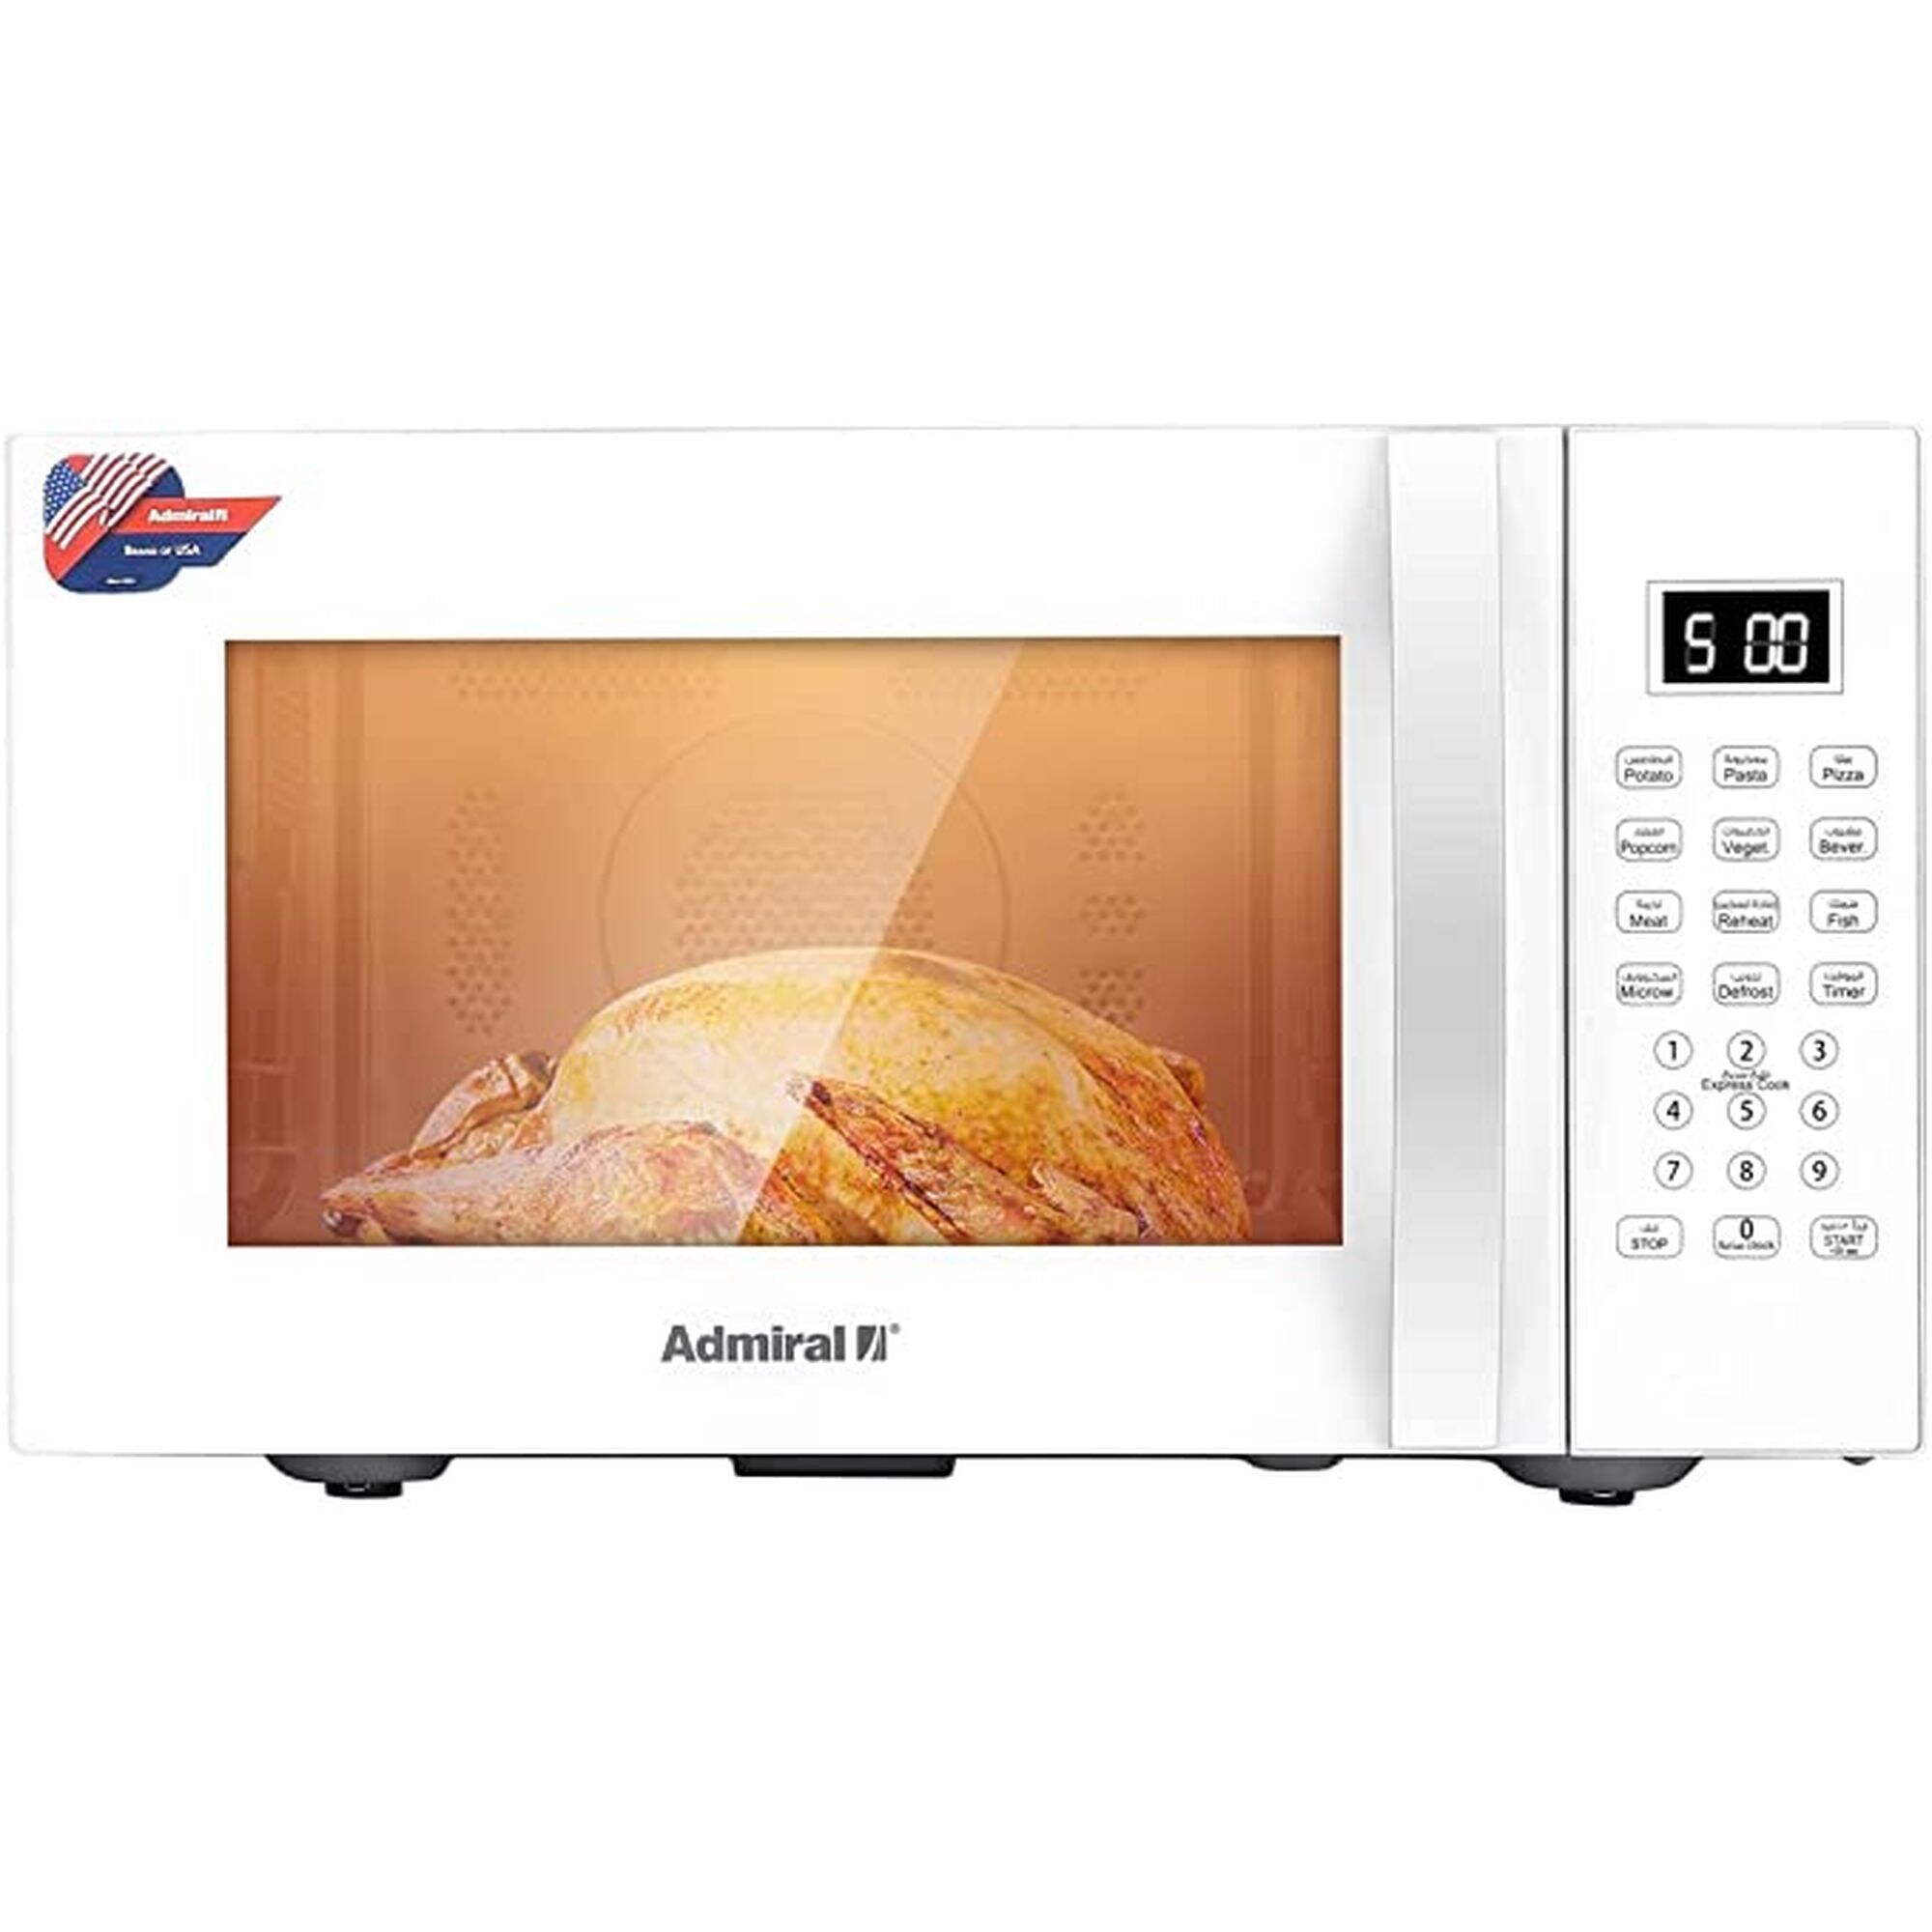 Admiral Microwave Oven, 800W, 23L - White